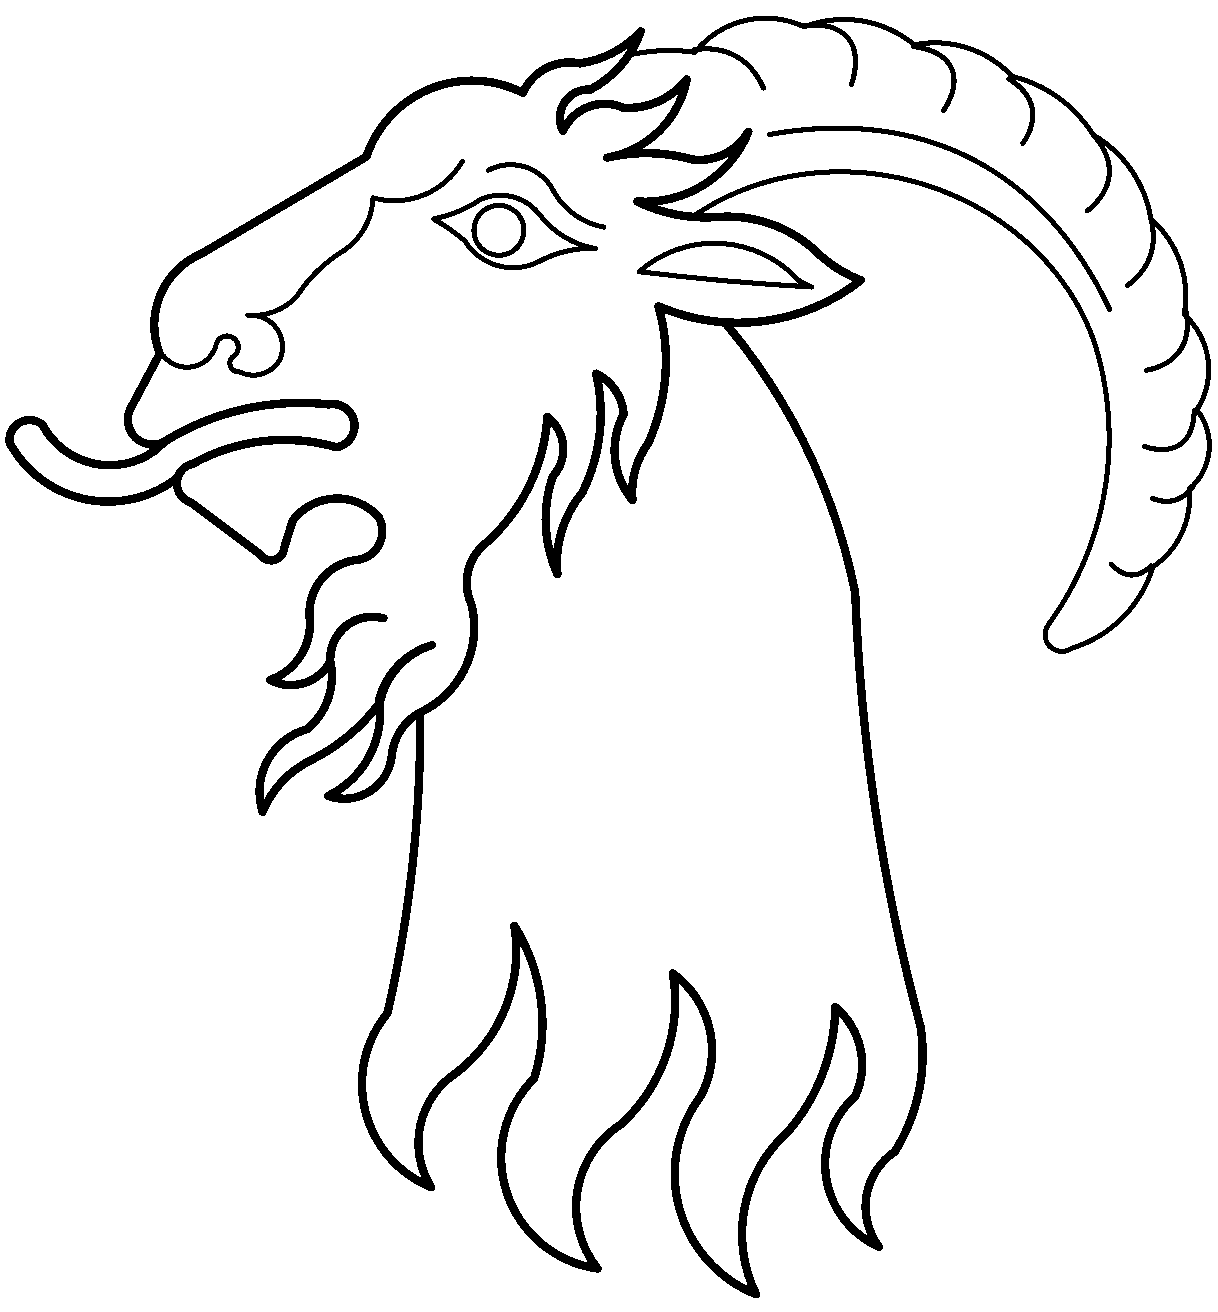 Goat - Traceable Heraldic Art